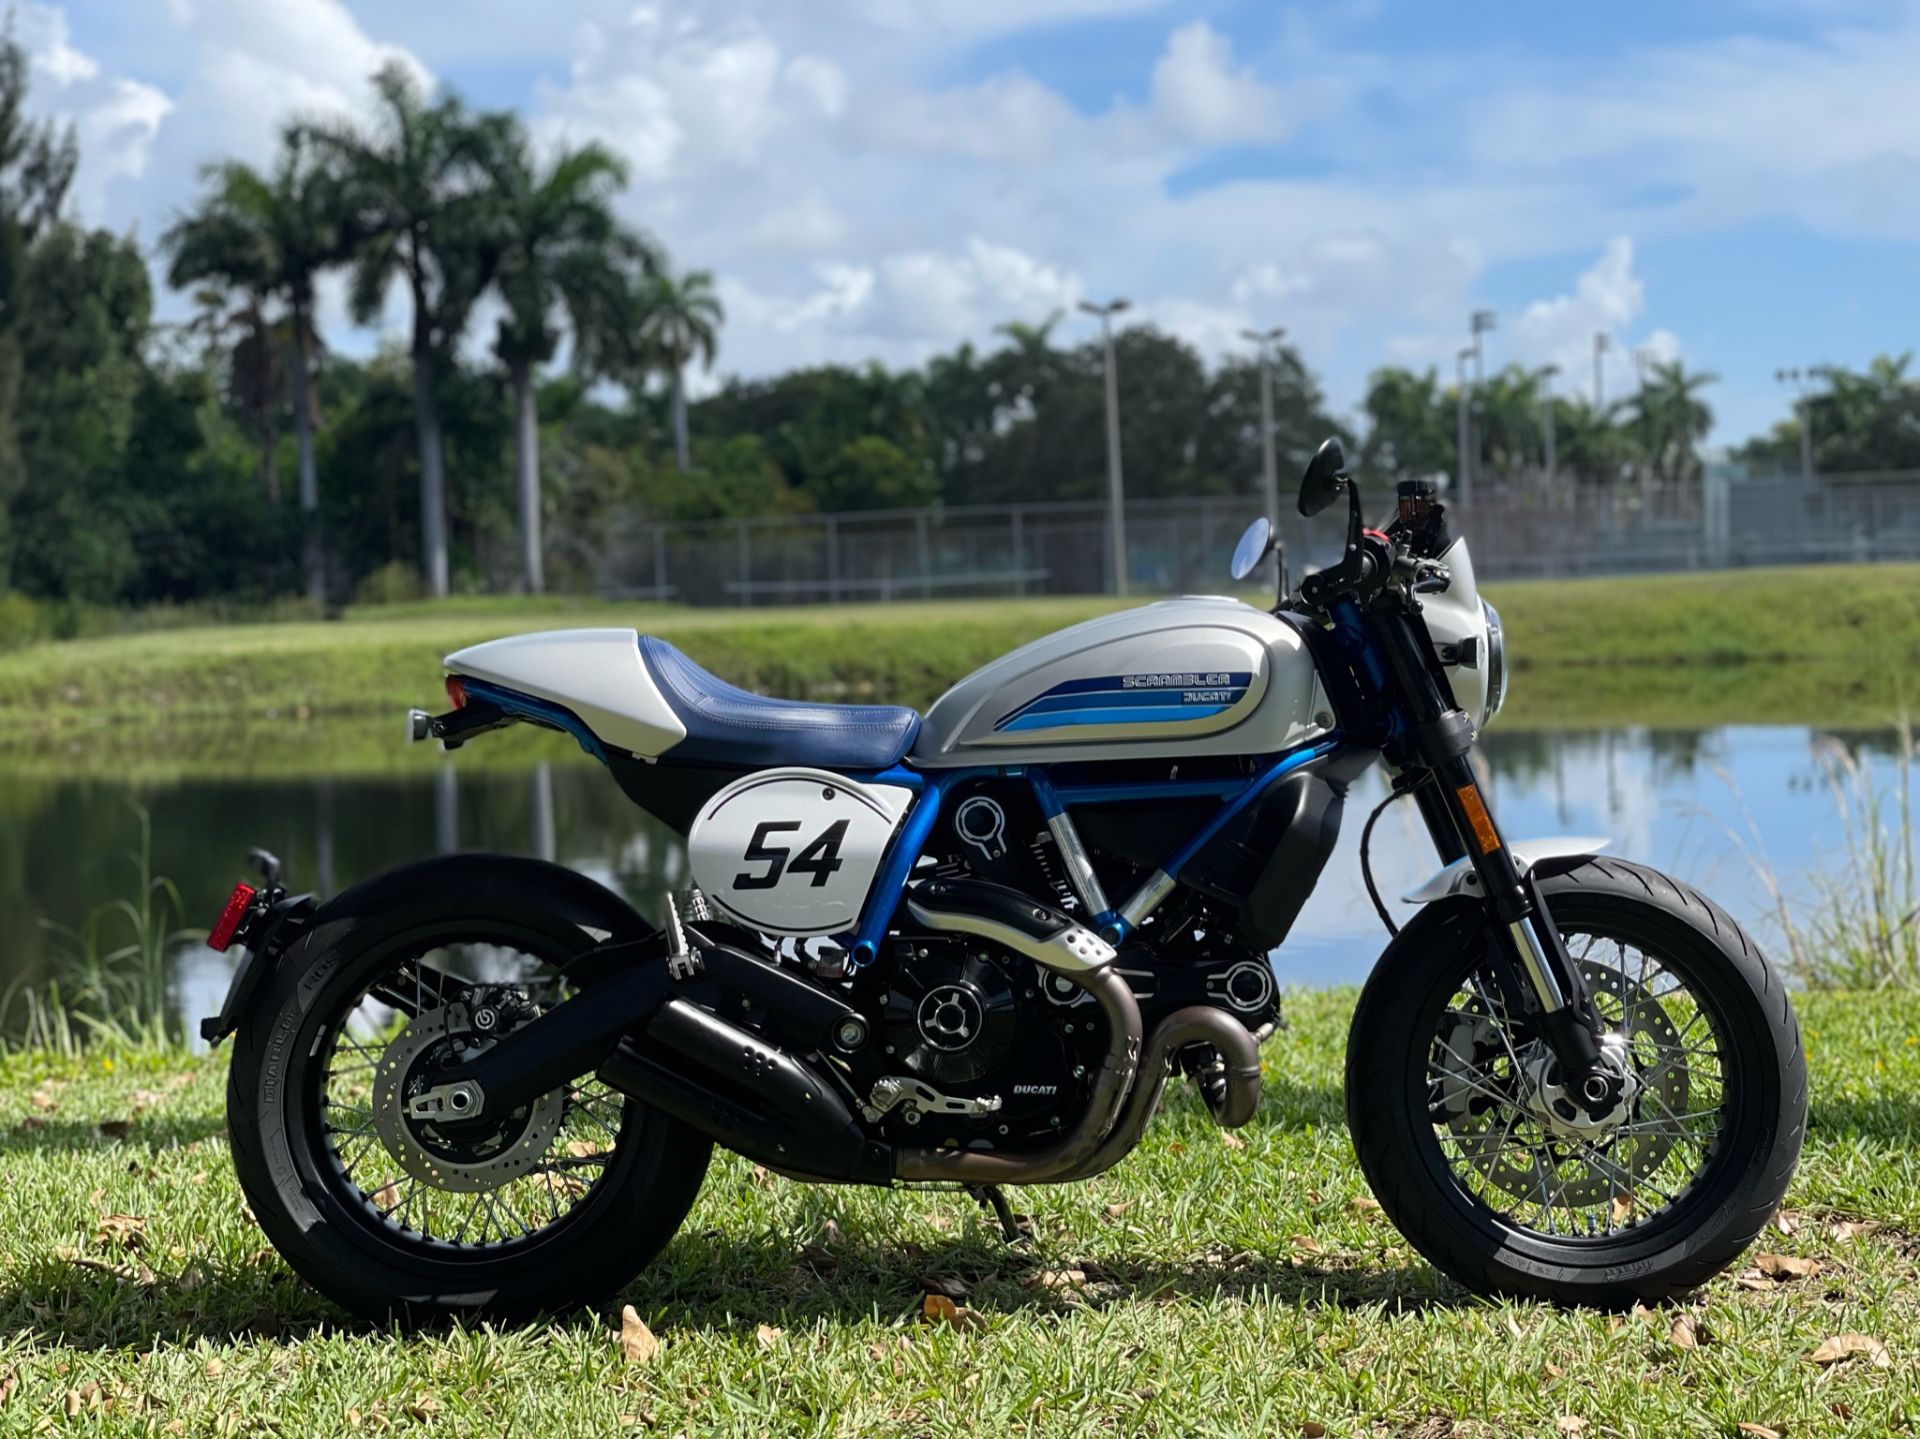 2020 Ducati Scrambler Cafe Racer in North Miami Beach, Florida - Photo 3